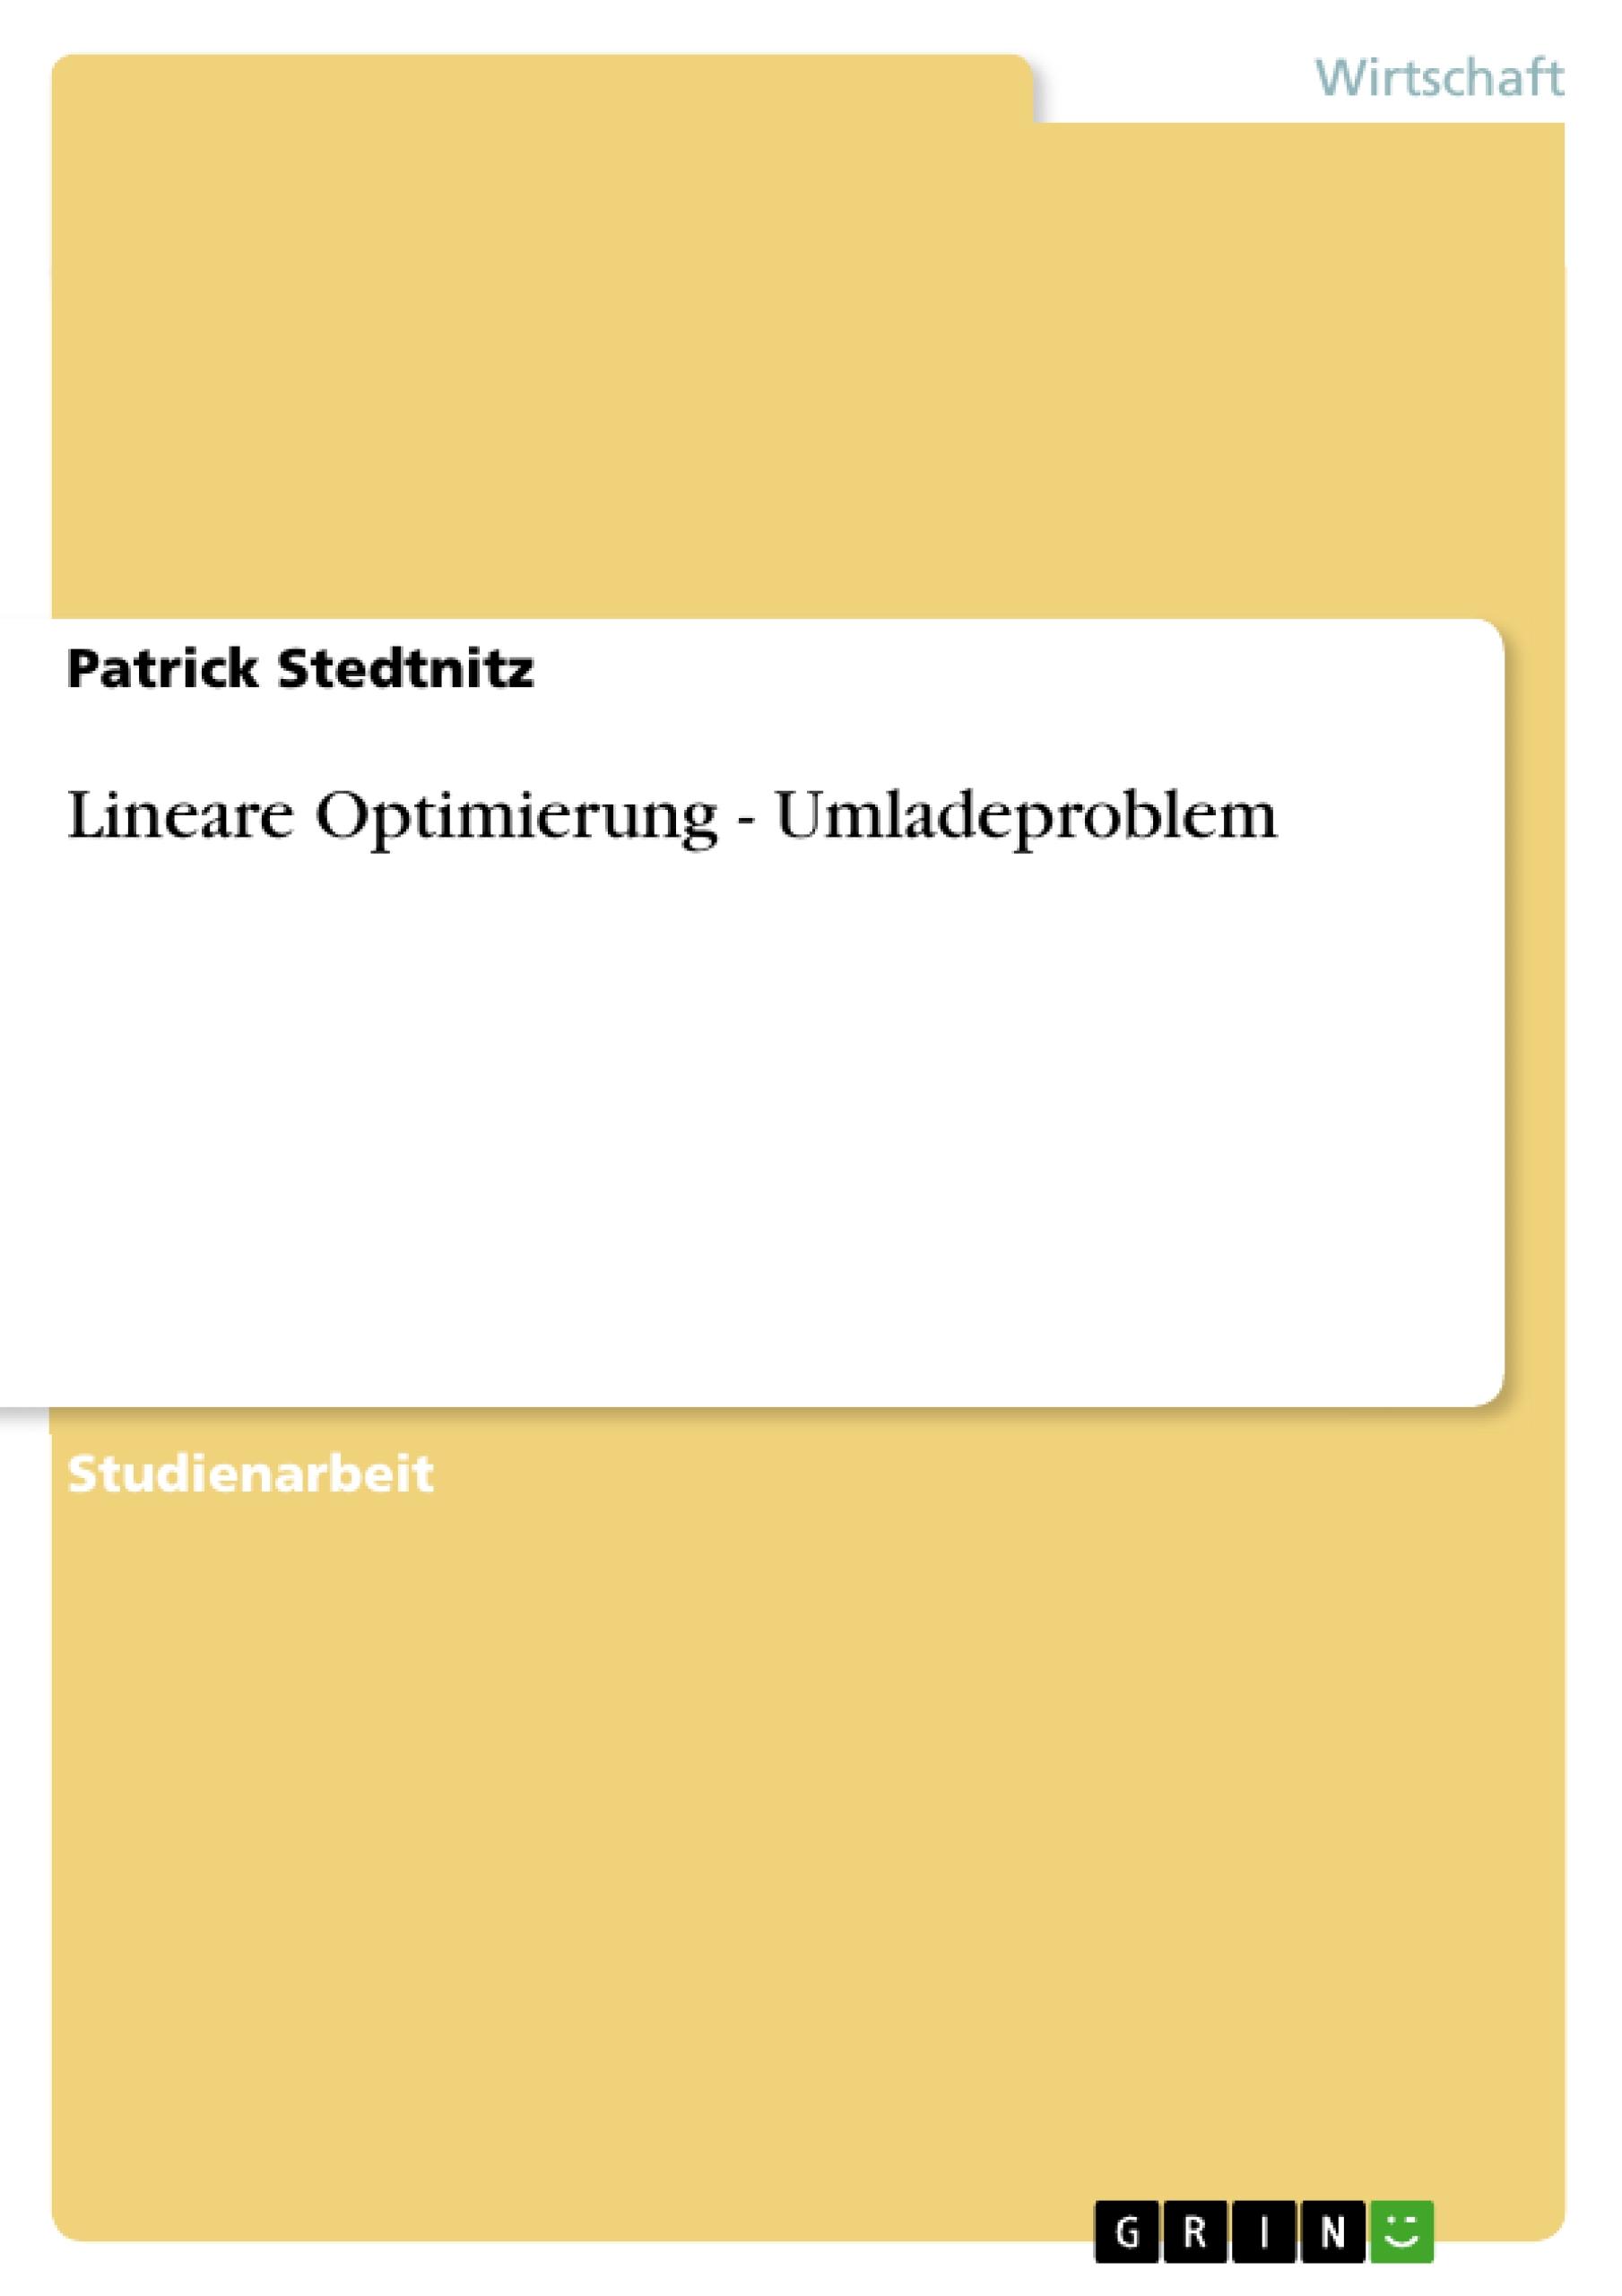 Lineare Optimierung - Umladeproblem - Stedtnitz, Patrick